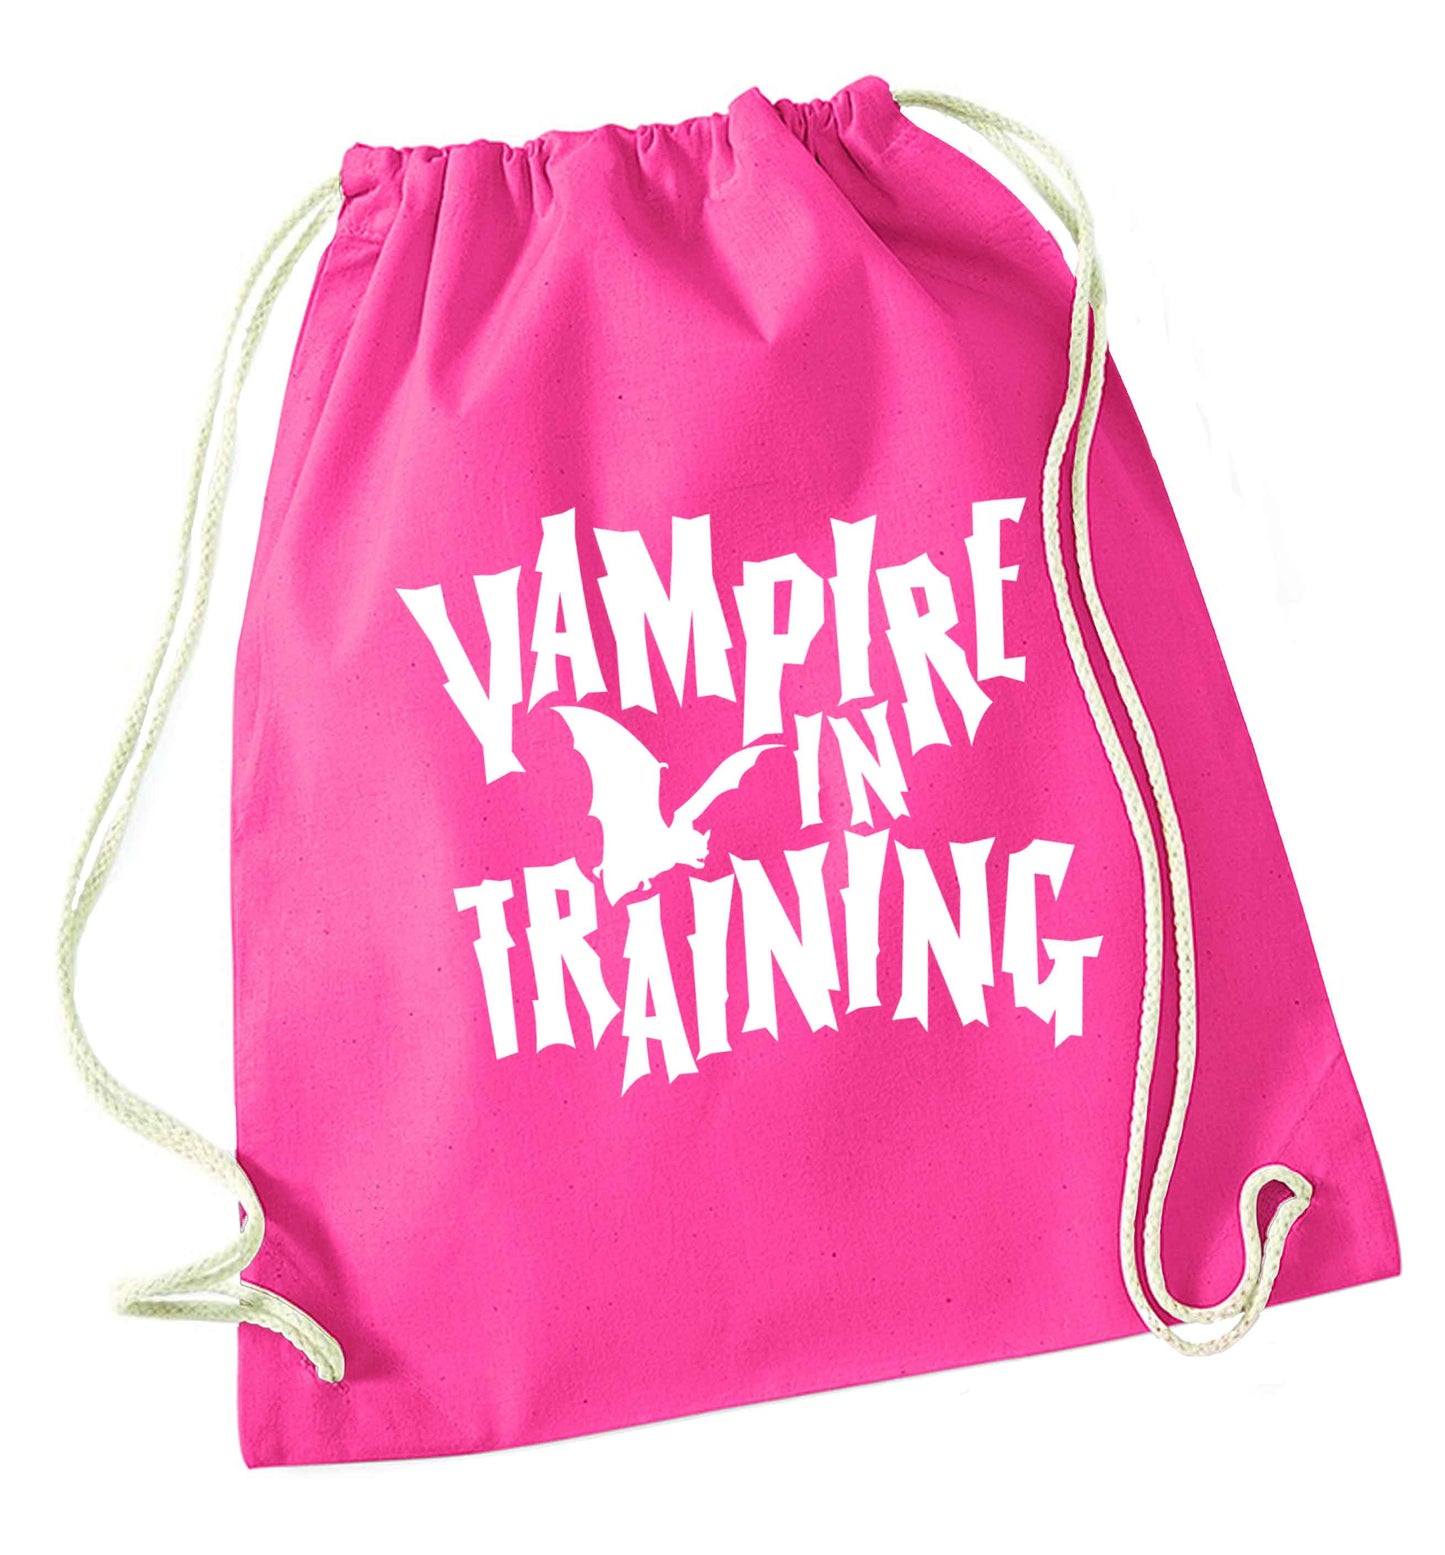 Vampire in training pink drawstring bag